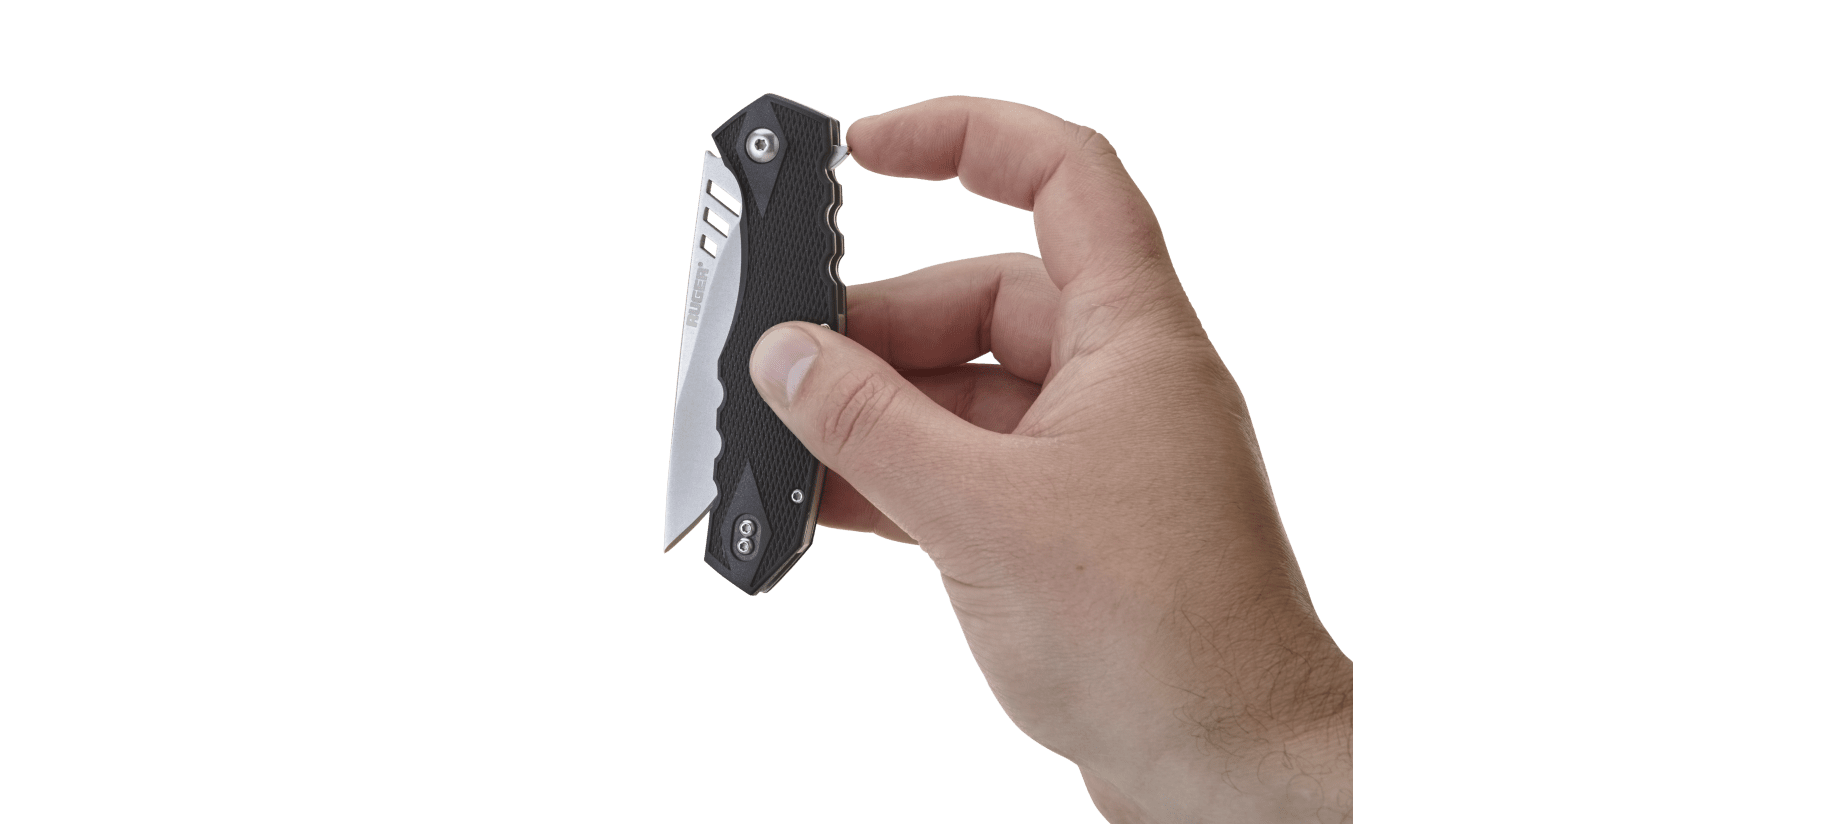 фото Складной нож crkt ruger® follow-through™ compact, сталь 8cr13mov, рукоять термопластик grn